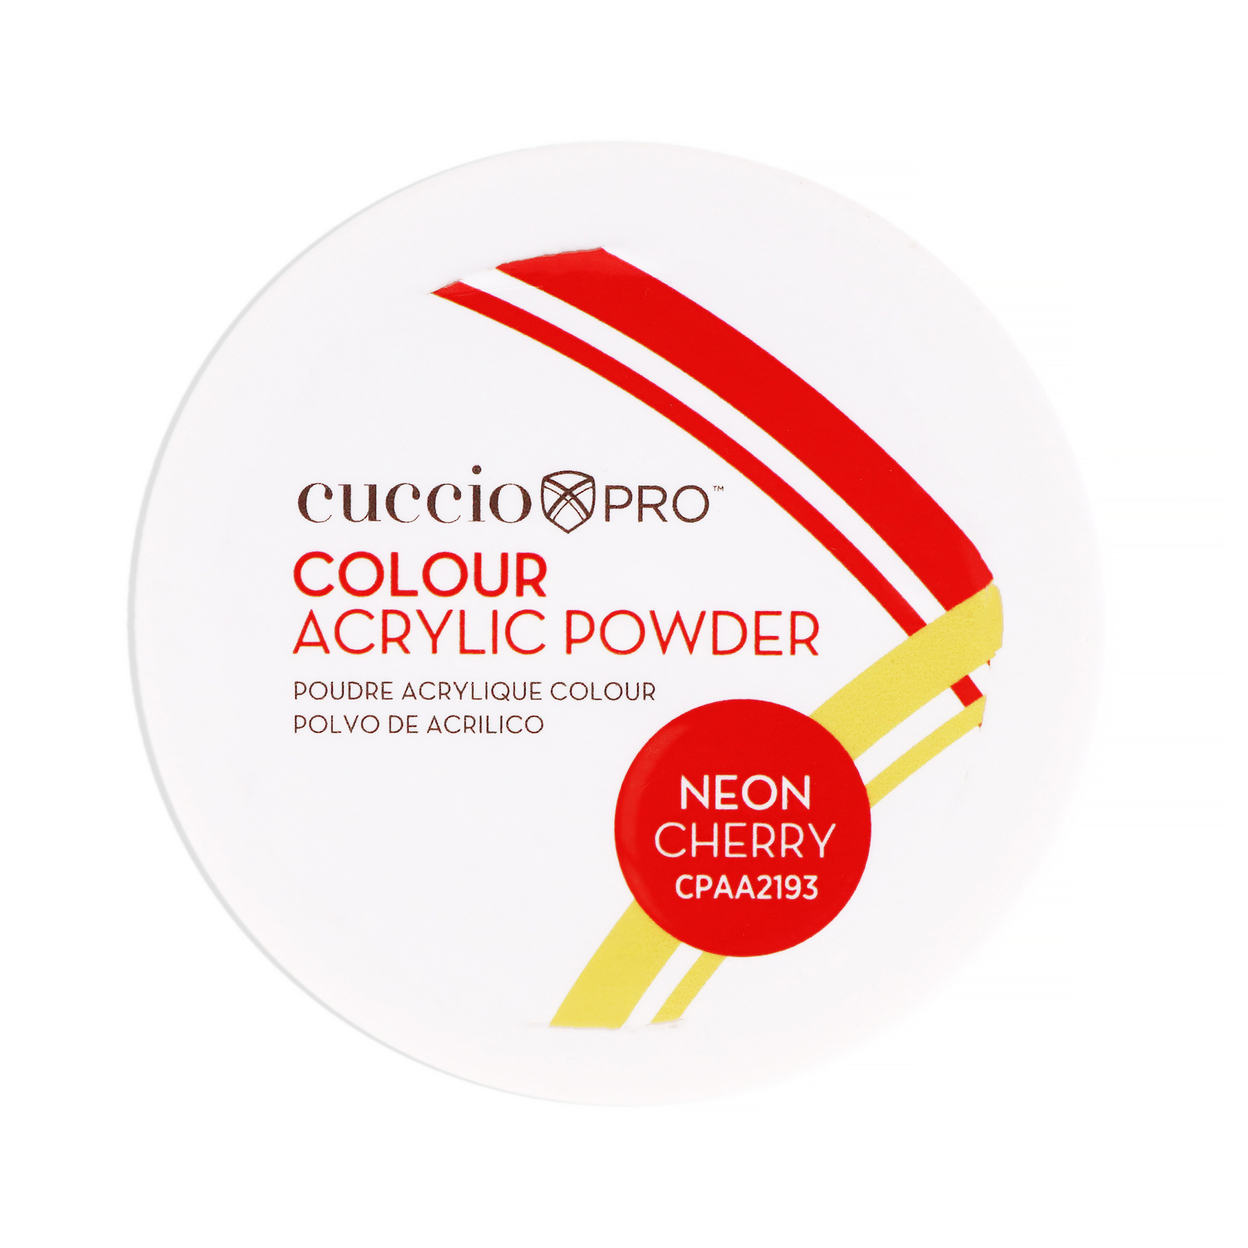 Cuccio PRO Colour Acrylic Powder - Neon Cherry 1.6 Oz